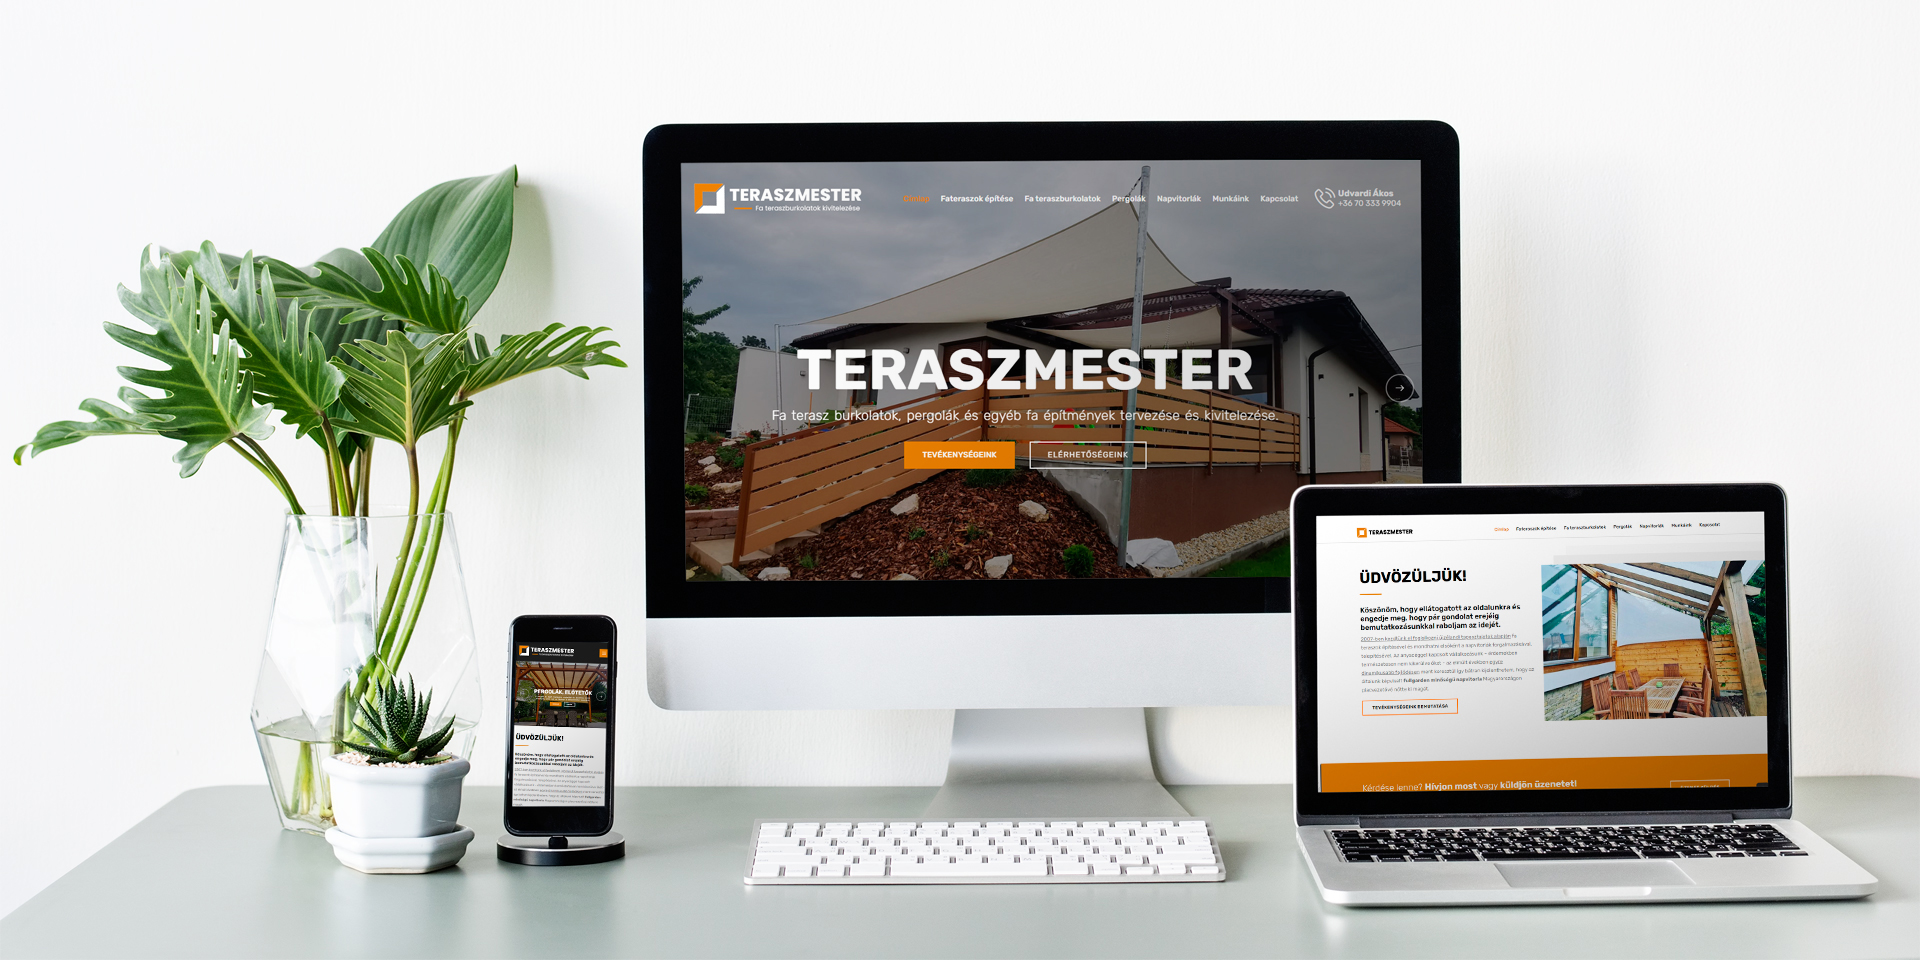 Teraszmester.hu website is ready